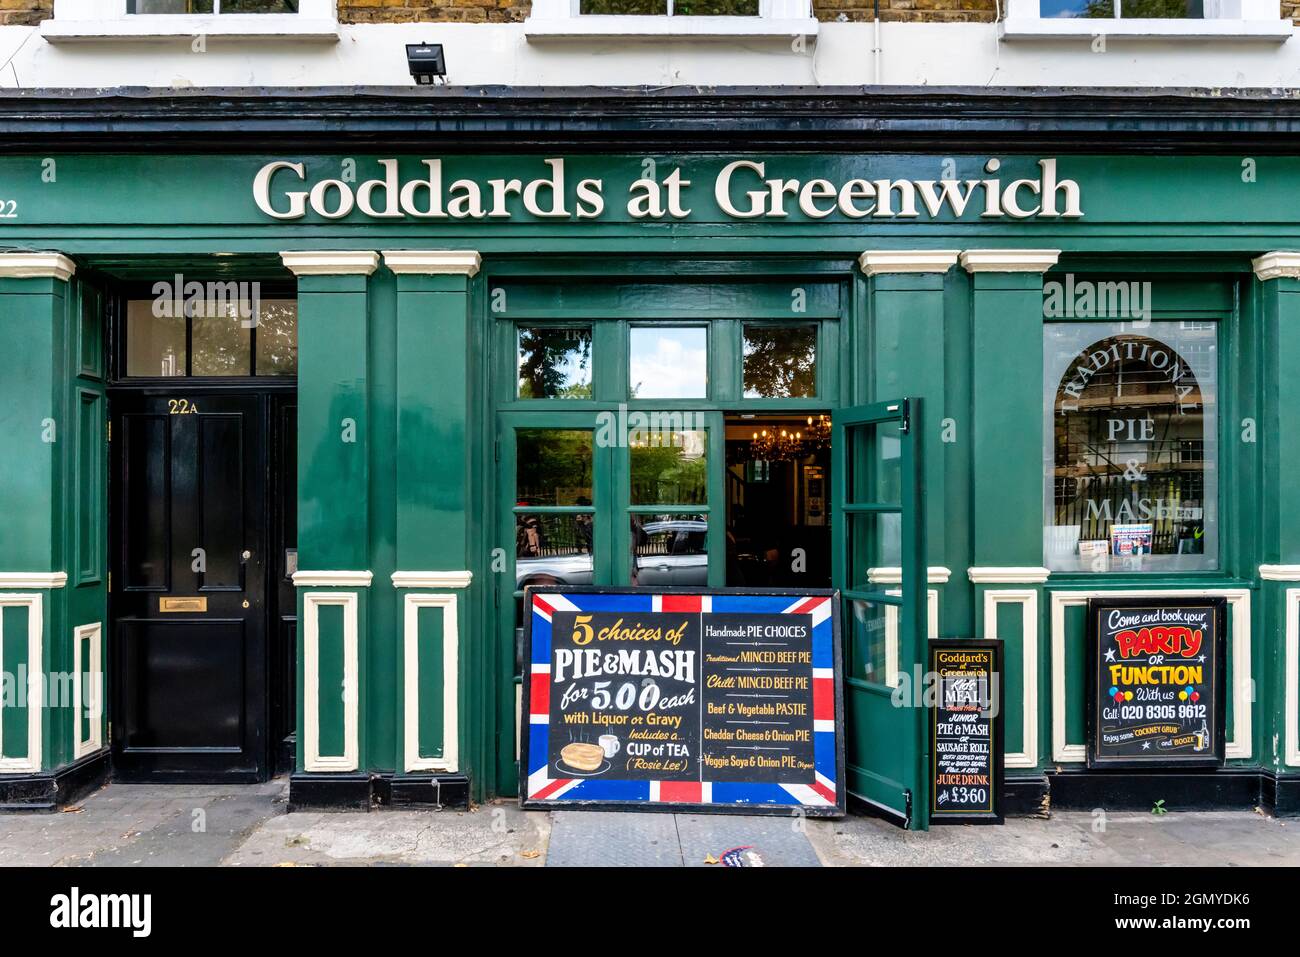 Goddards Pie and Mash Restaurant, Greenwich, London, UK. Stock Photo